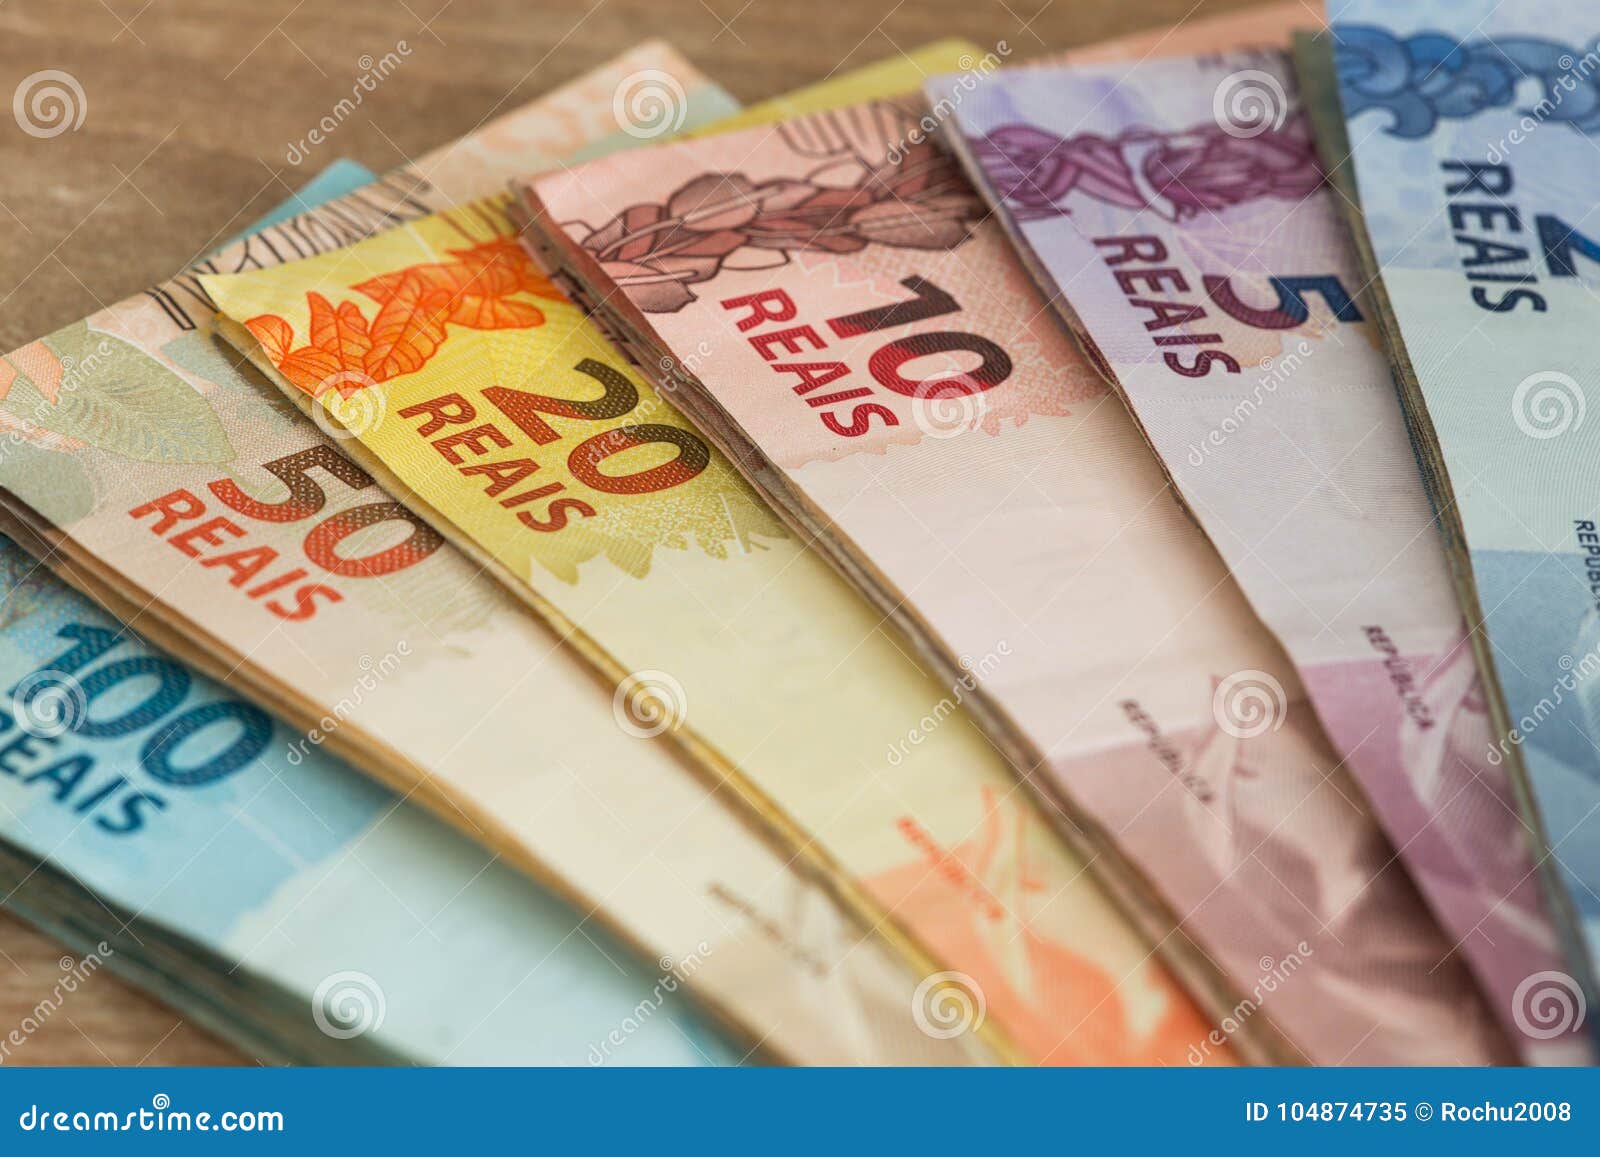 brazilian money reais, different nominal